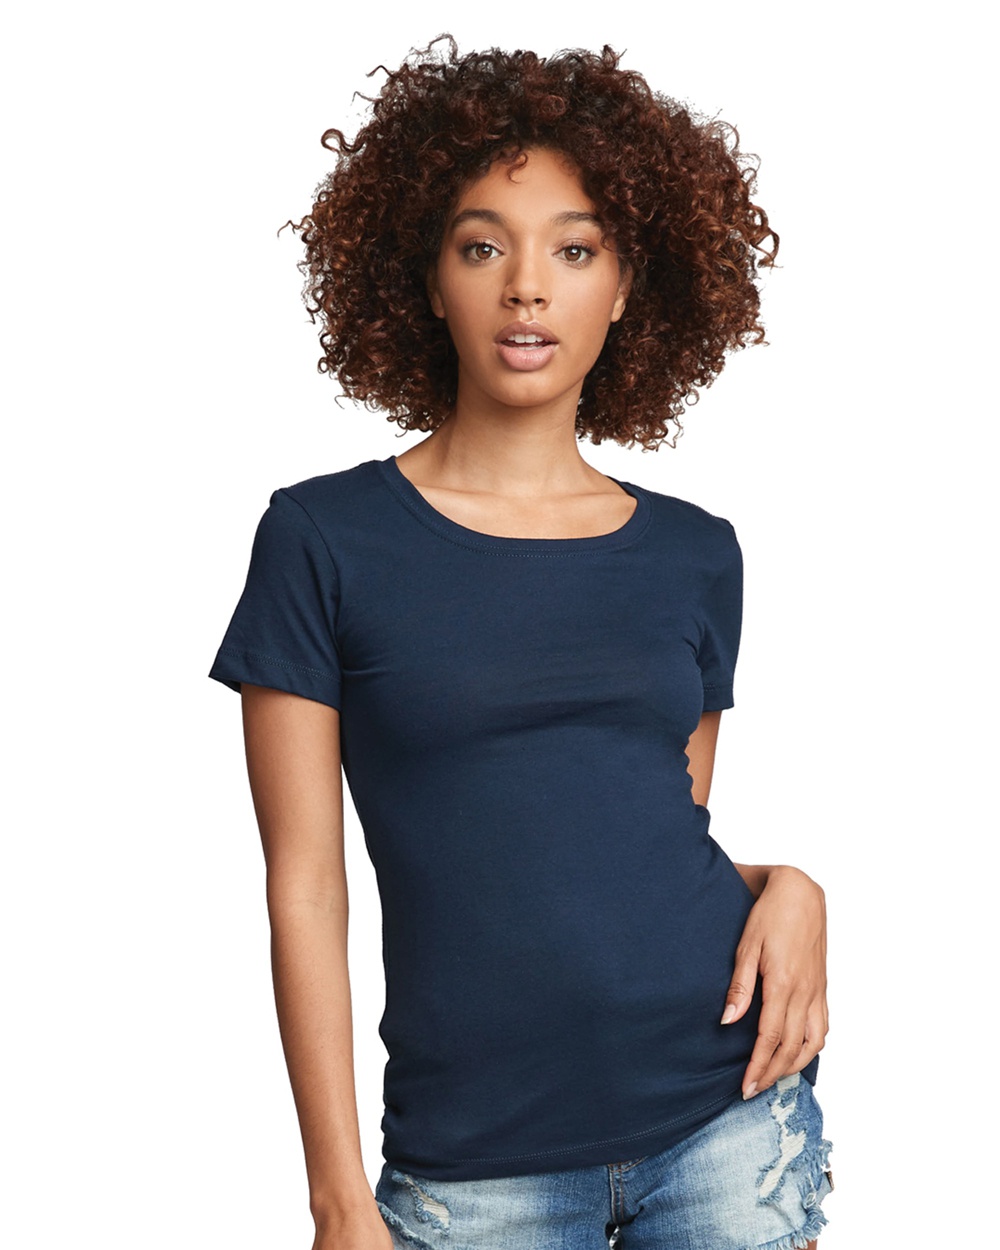 Next Level Apparel® 1510 Women's Ideal T-Shirt - One Stop